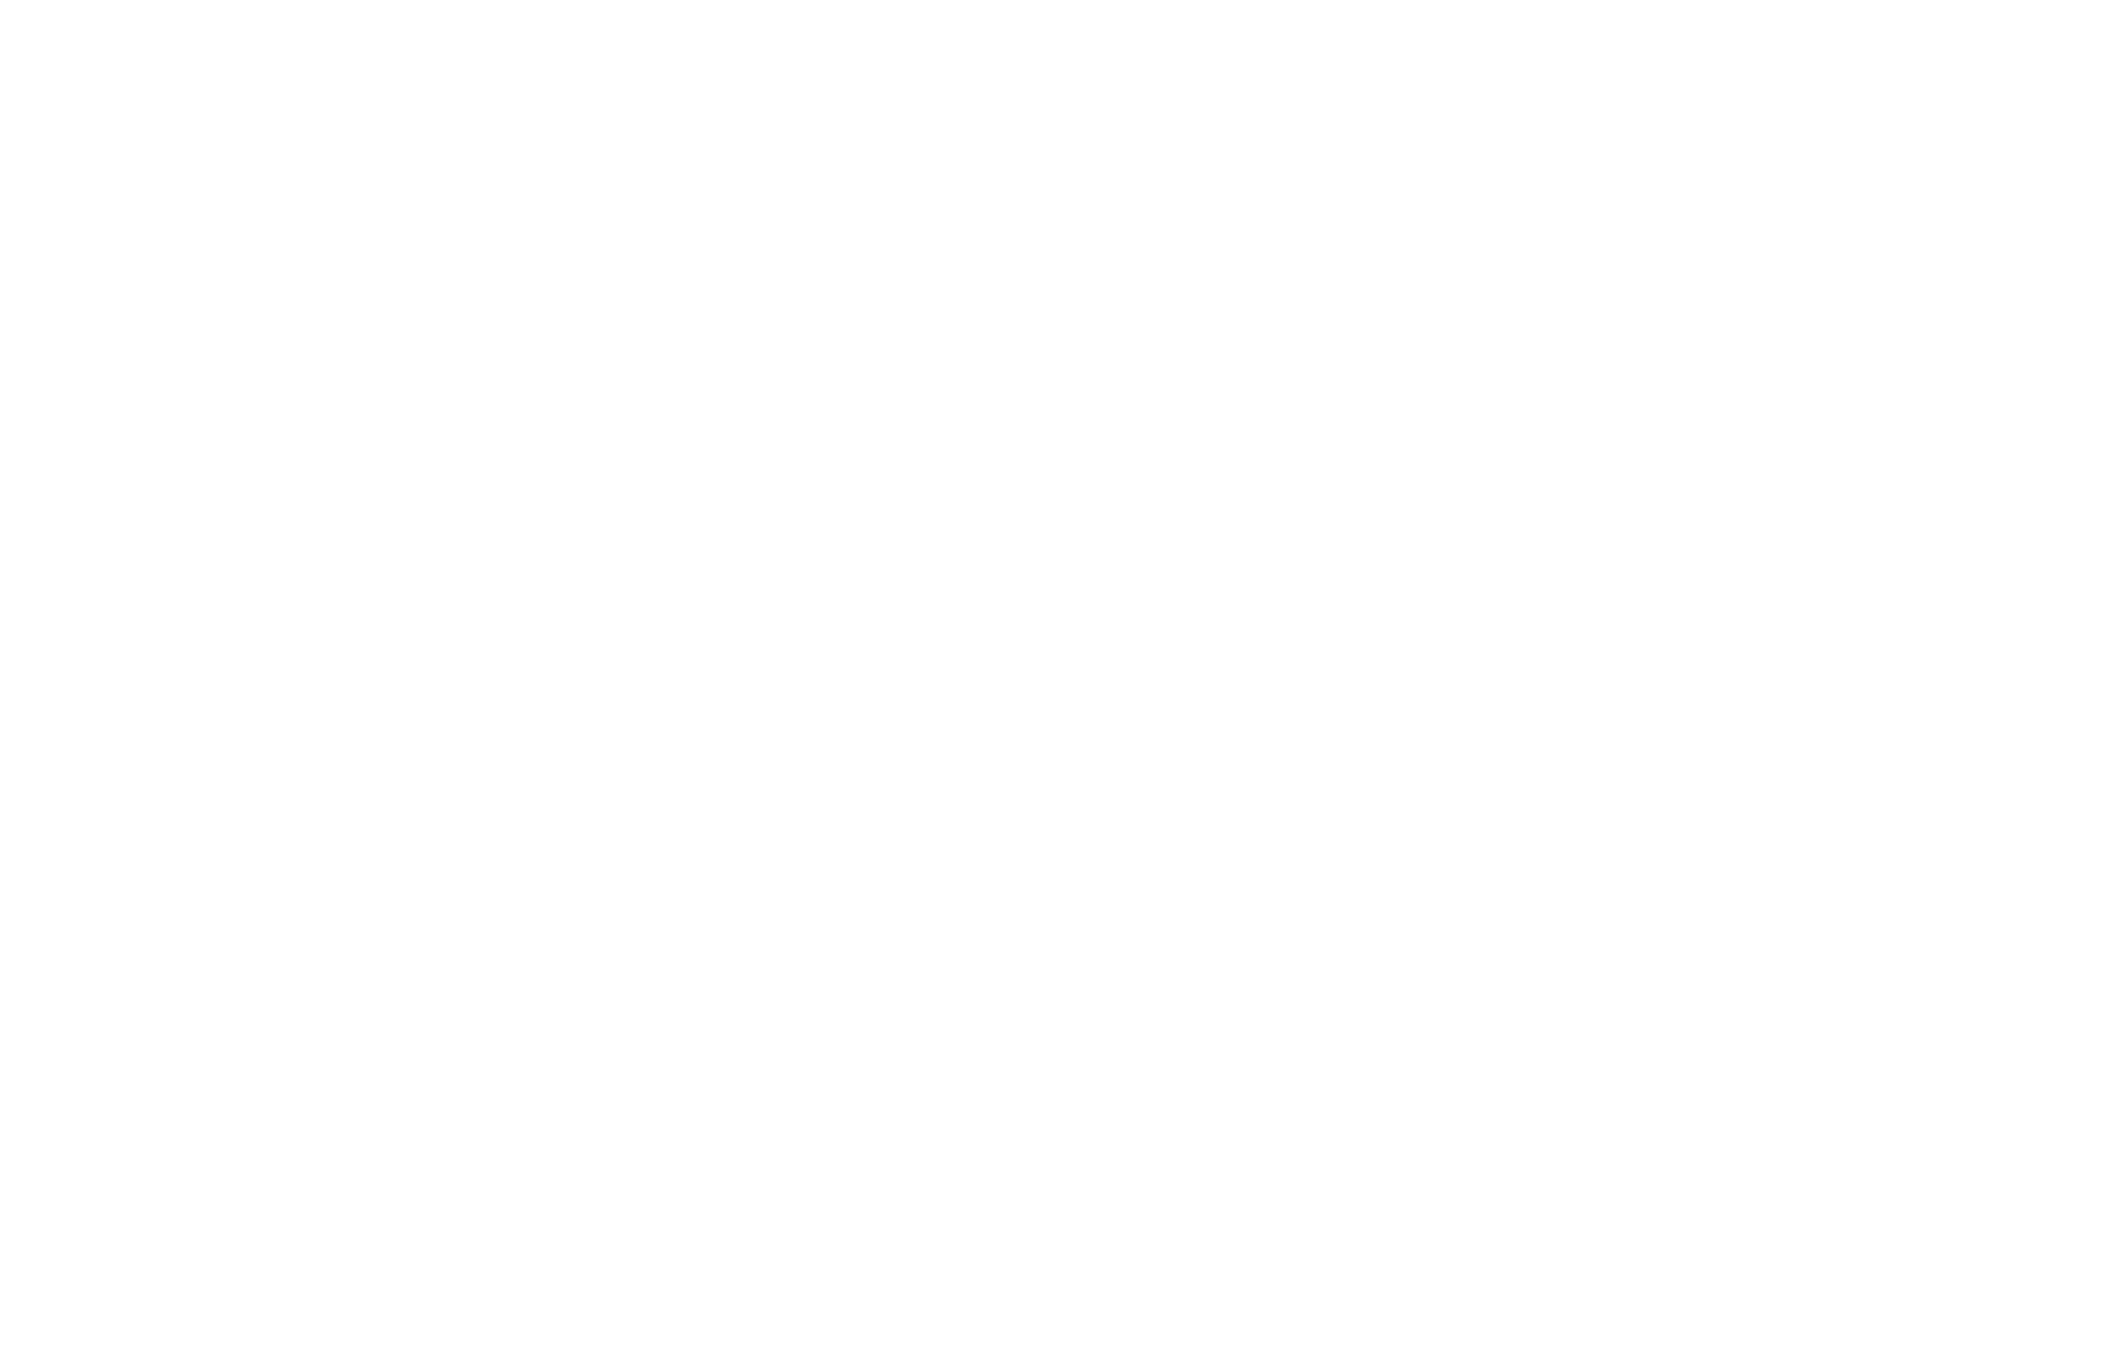 321 Jefferson Large logo in white